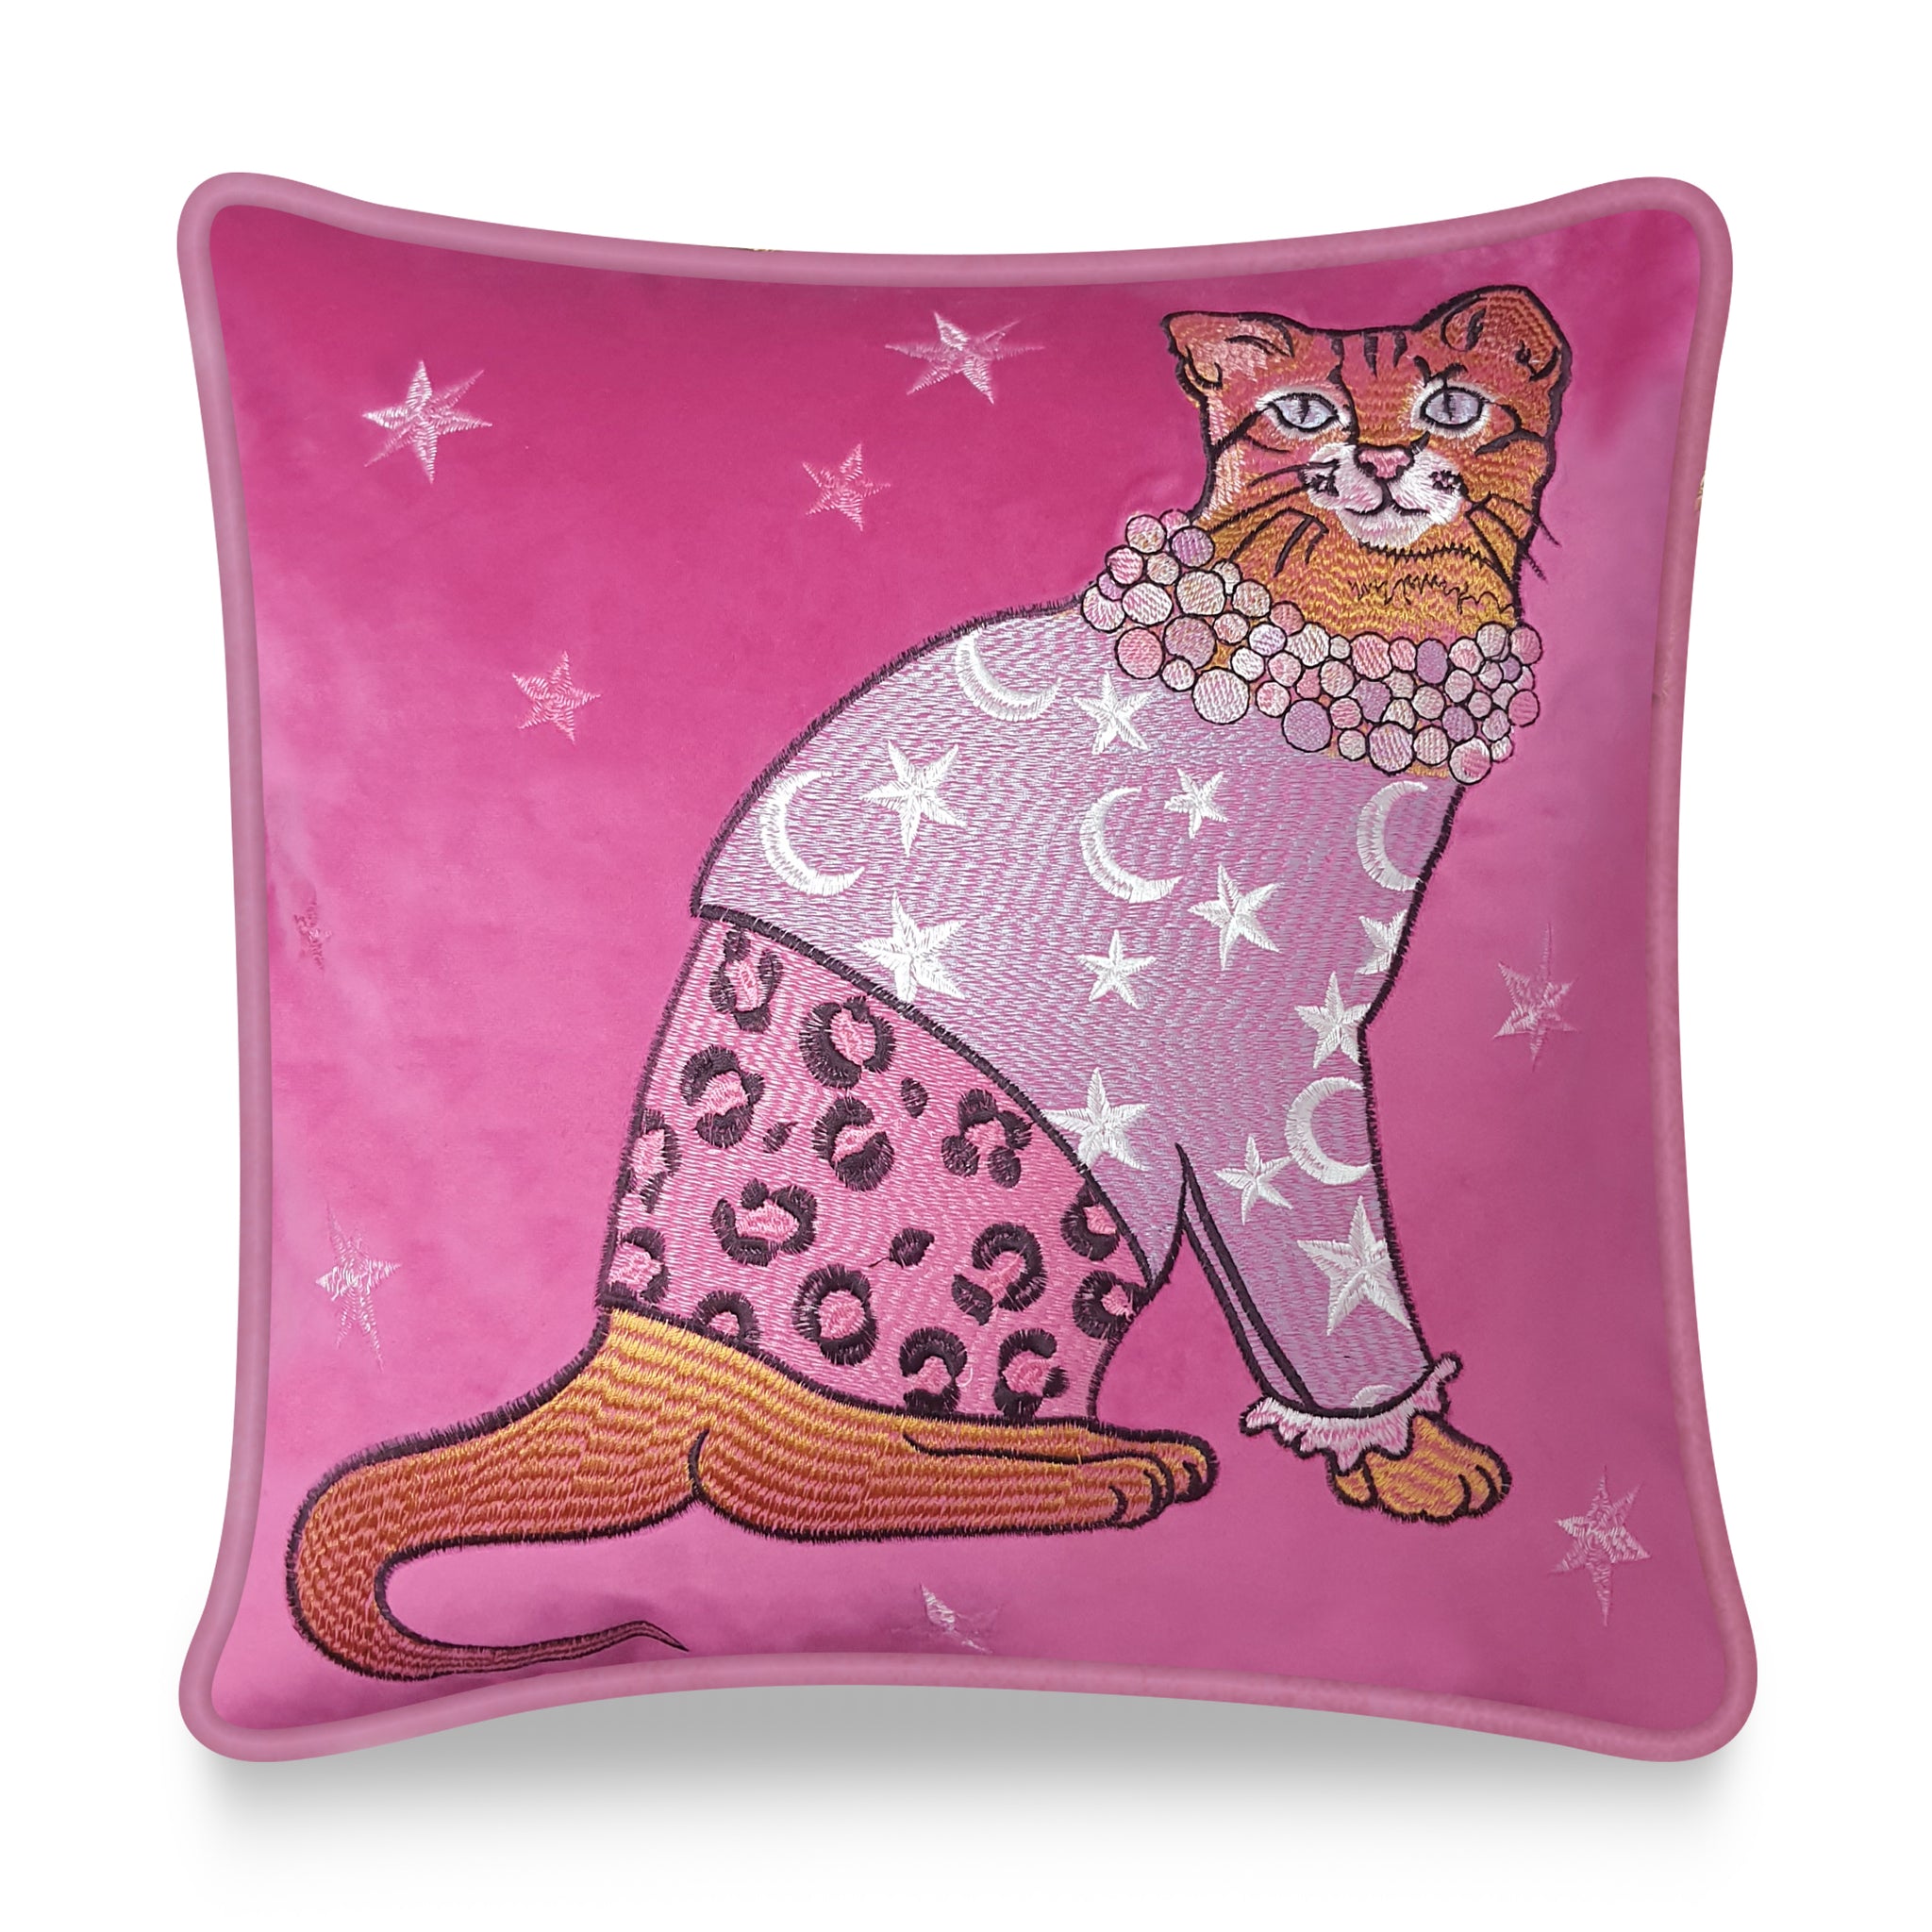  Velvet Cushion Cover Fashion Cat Embroidery Decorative Pillowcase Modern Home Decor Throw Pillow for Sofa Chair Living Room 45x45 cm 